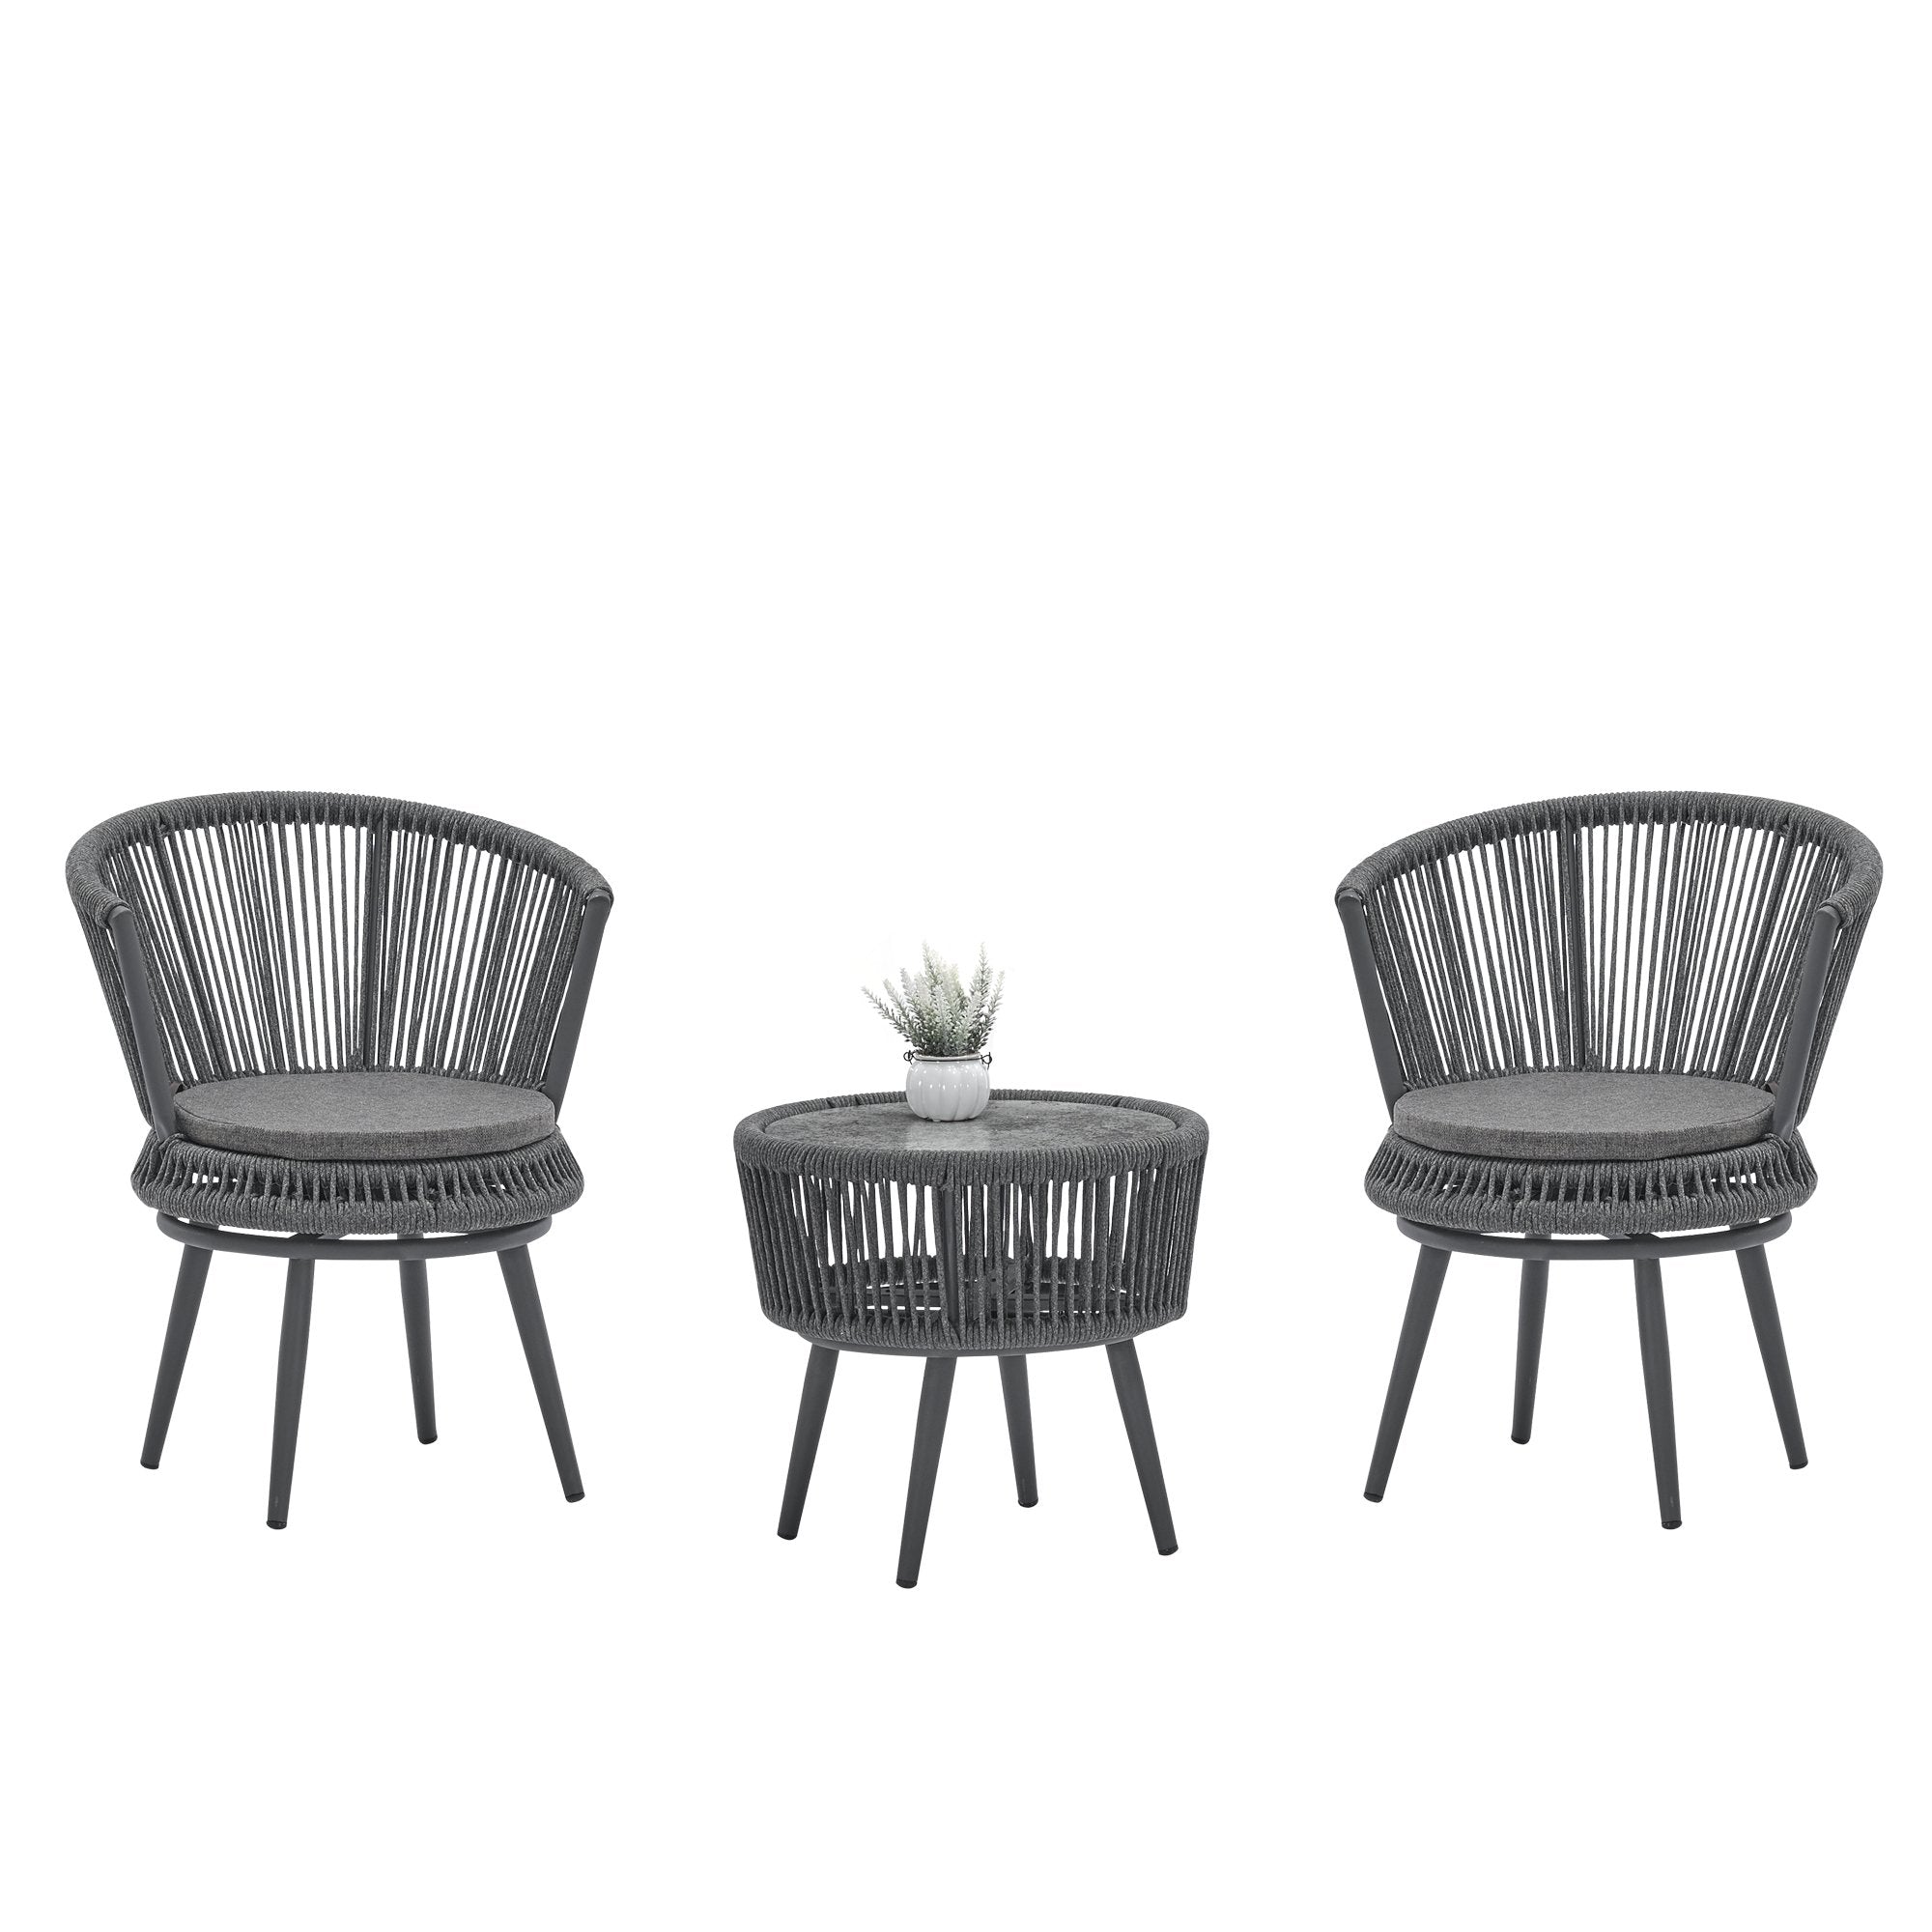 Garden coffee table chair set(3 PCS)